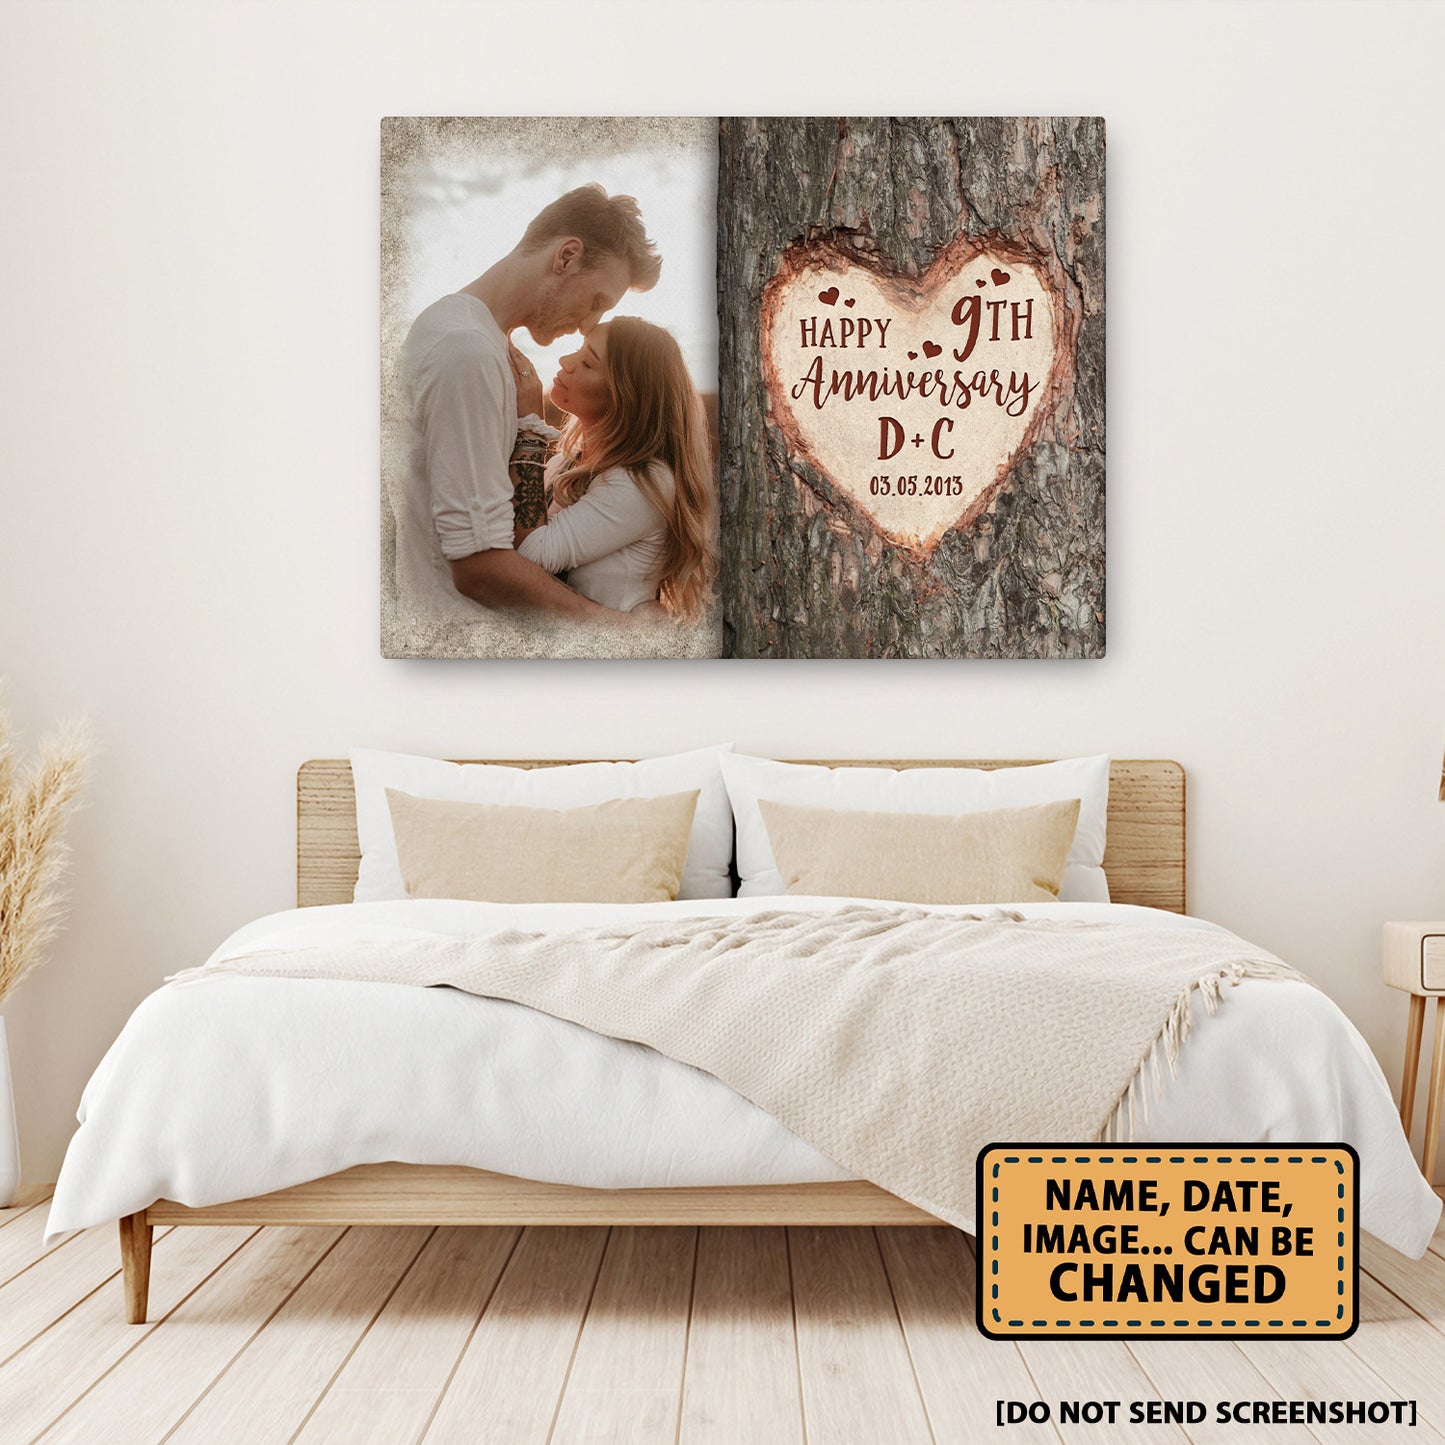 Happy 9th Anniversary Tree Heart Custom Image Personalized Canvas